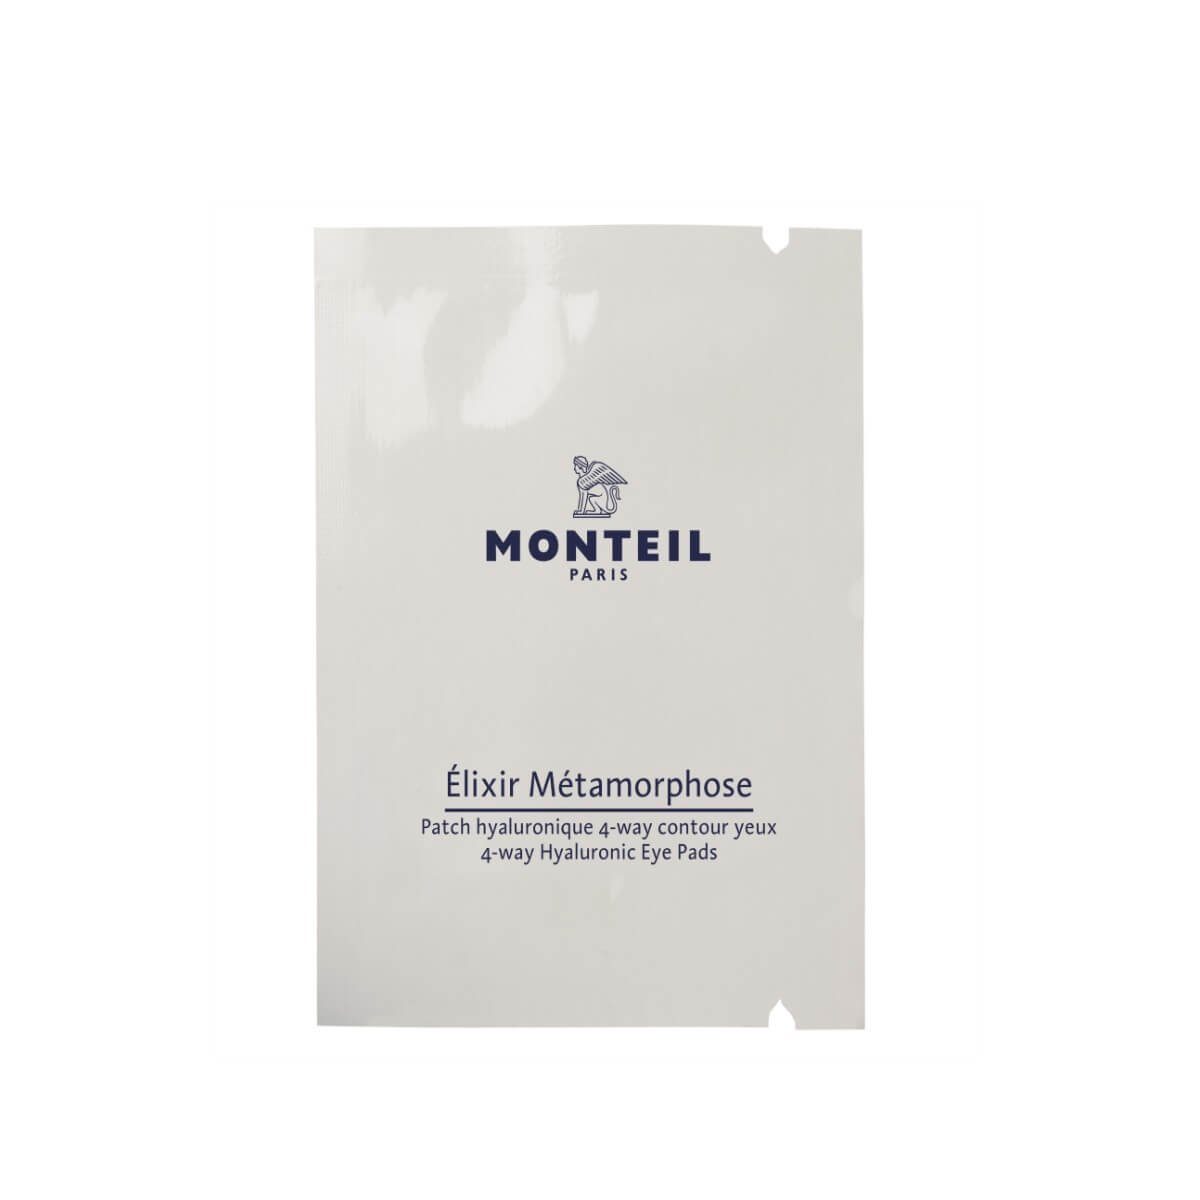 Monteil Paris Anti-Aging-Augencreme Monteil Paris Elixir Metamorphose 4-way  Hyaluronic Eye Pads 6x3g, Feuchtigkeitsspendende Augenpads